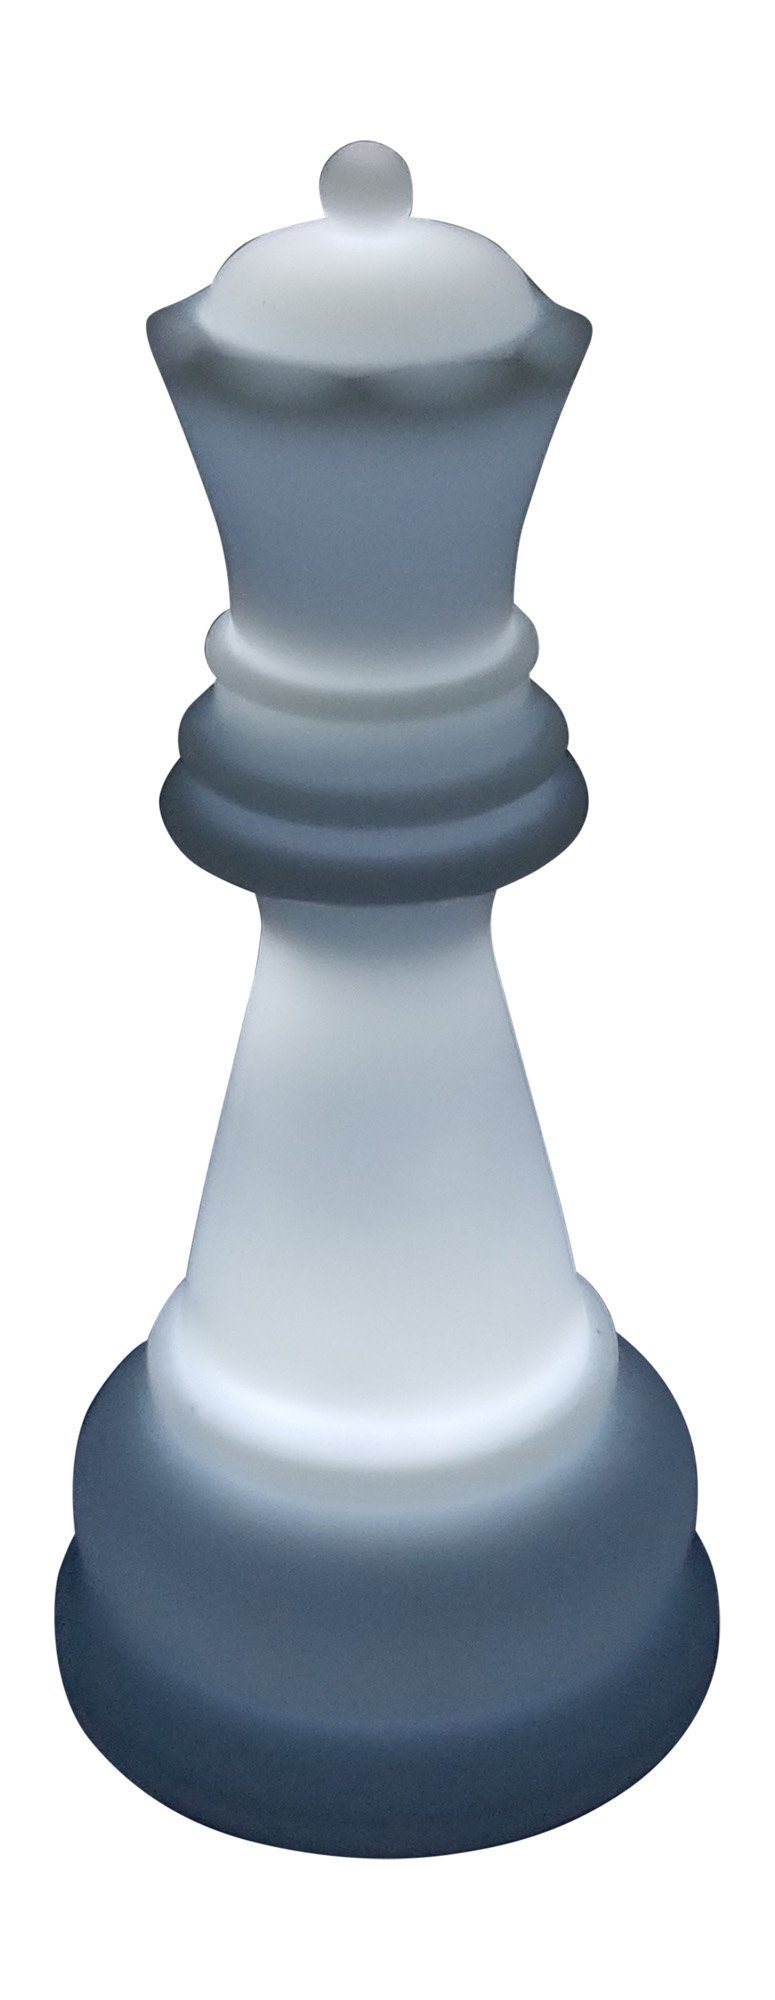 MegaChess 22 Inch Premium Plastic Queen Light-Up Giant Chess Piece - White |  | GiantChessUSA